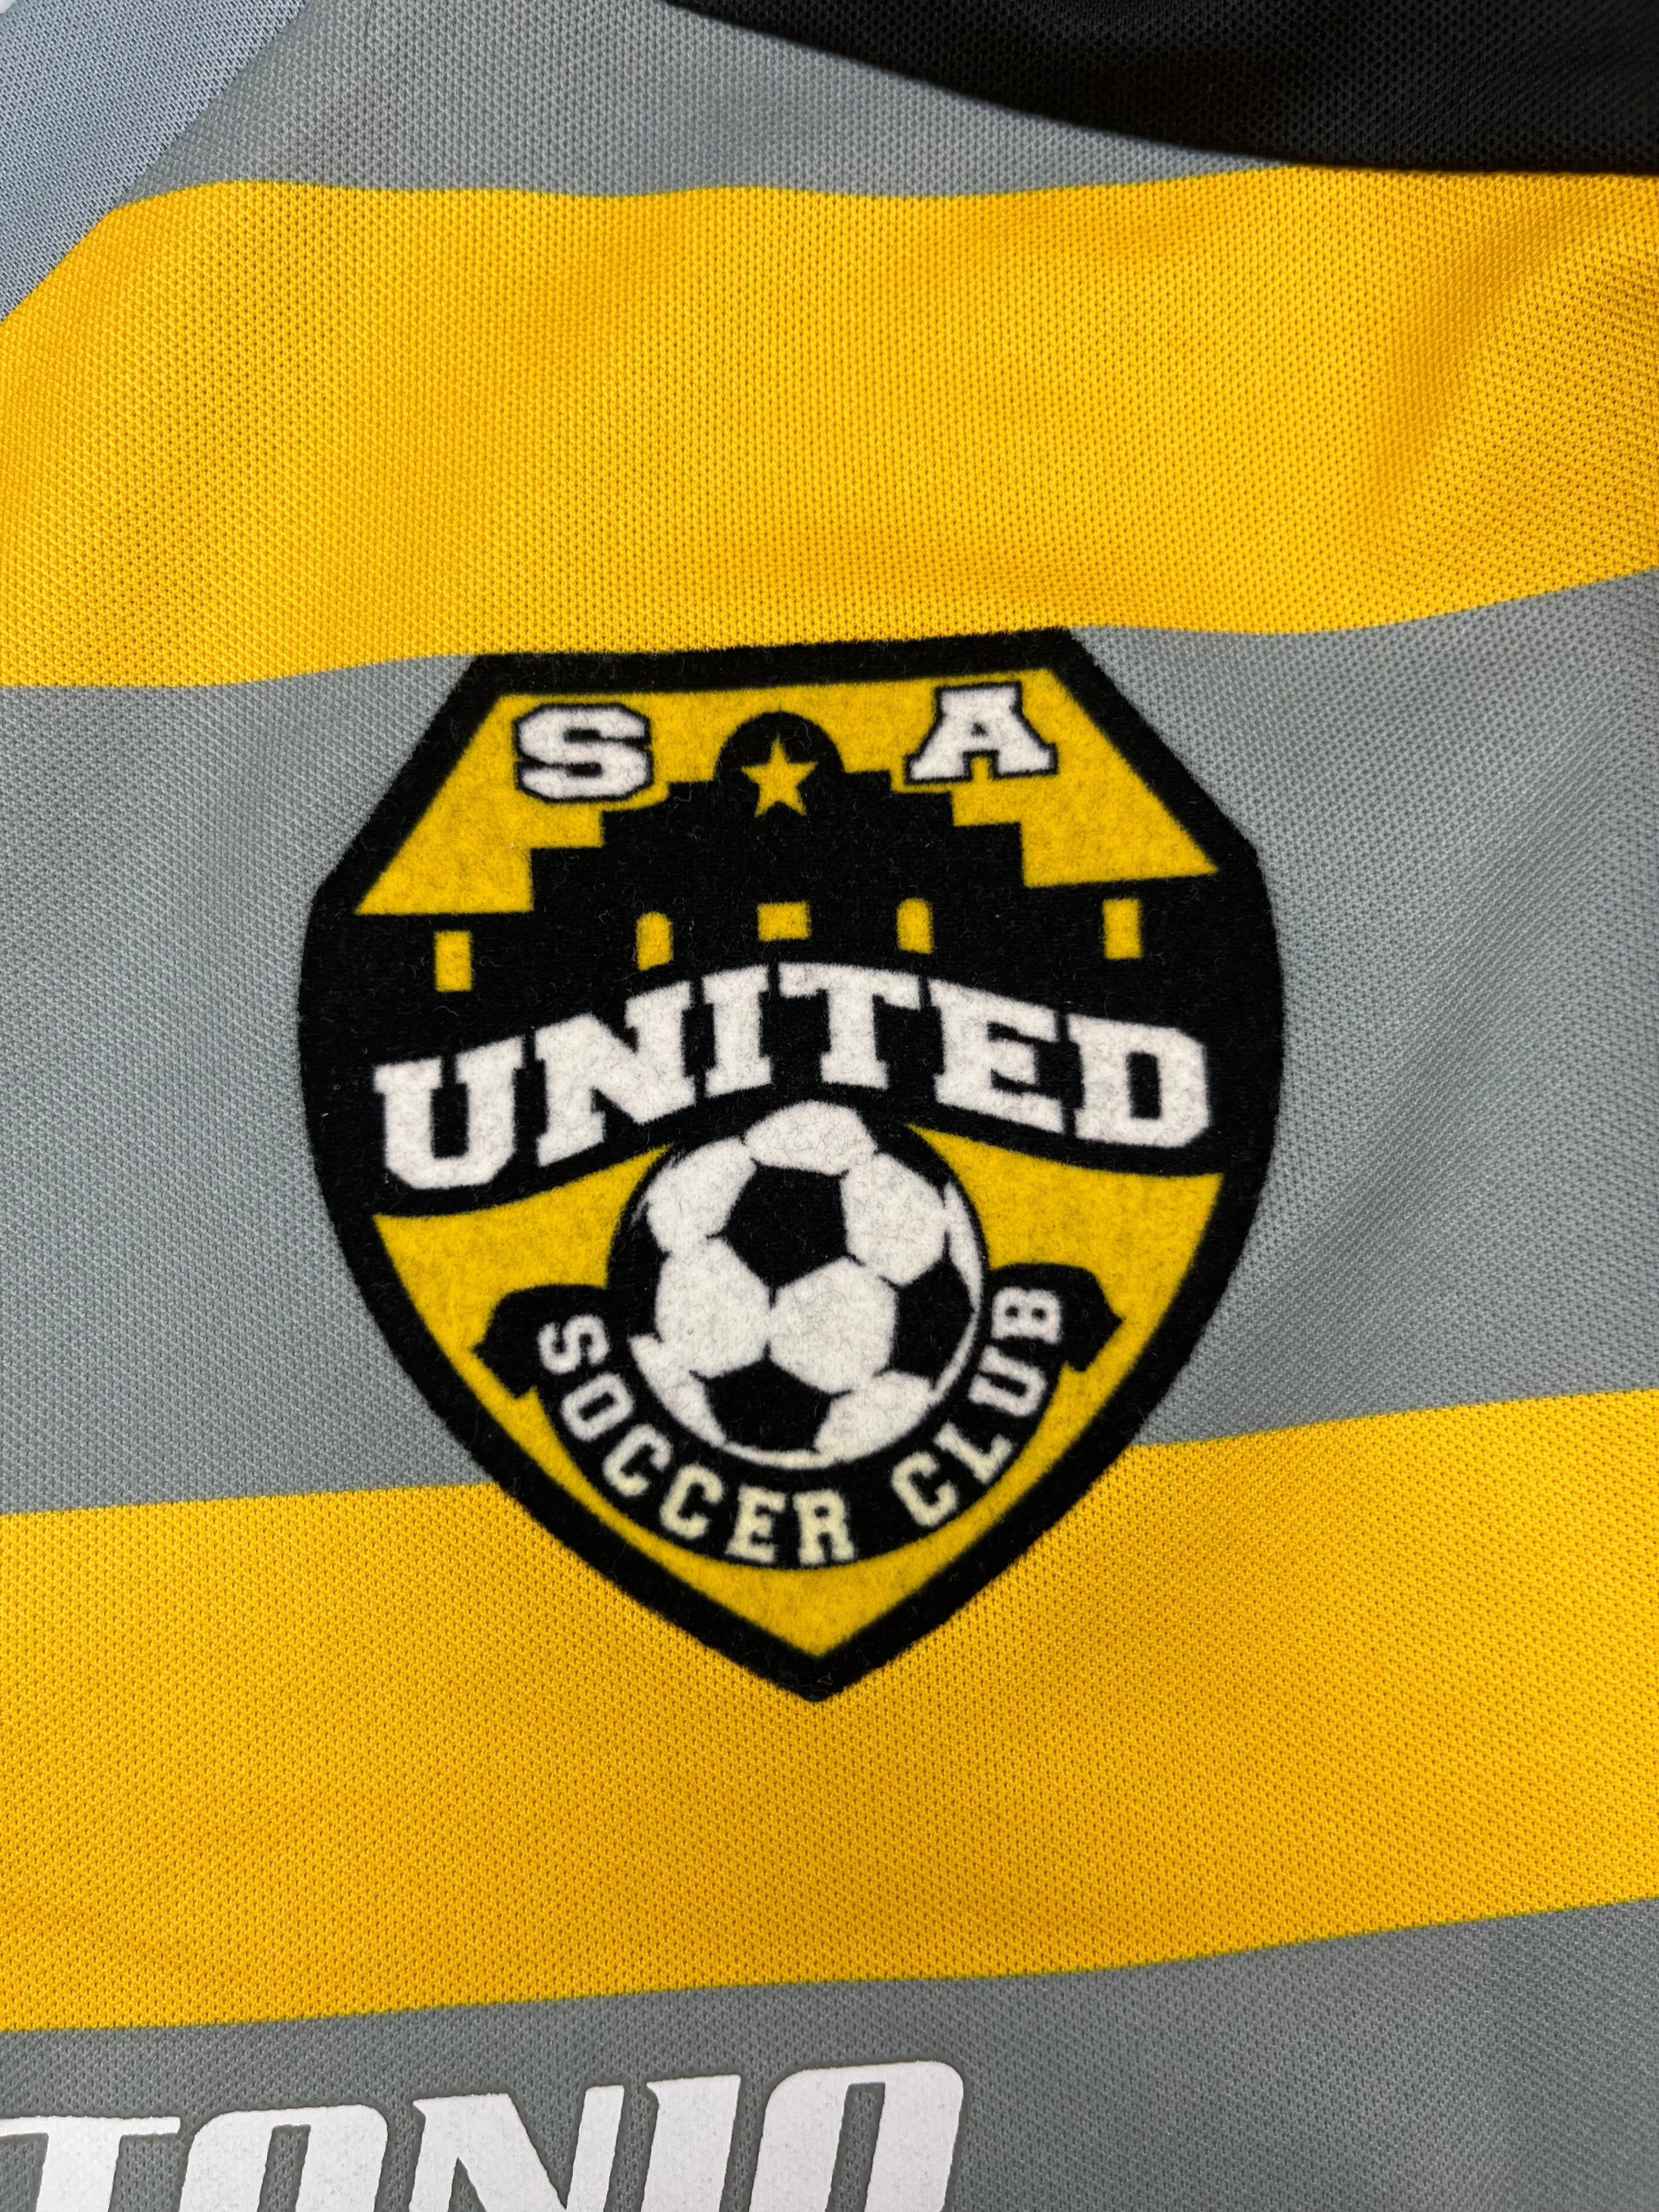 2013 San Antonio United Home Shirt (S) 9/10